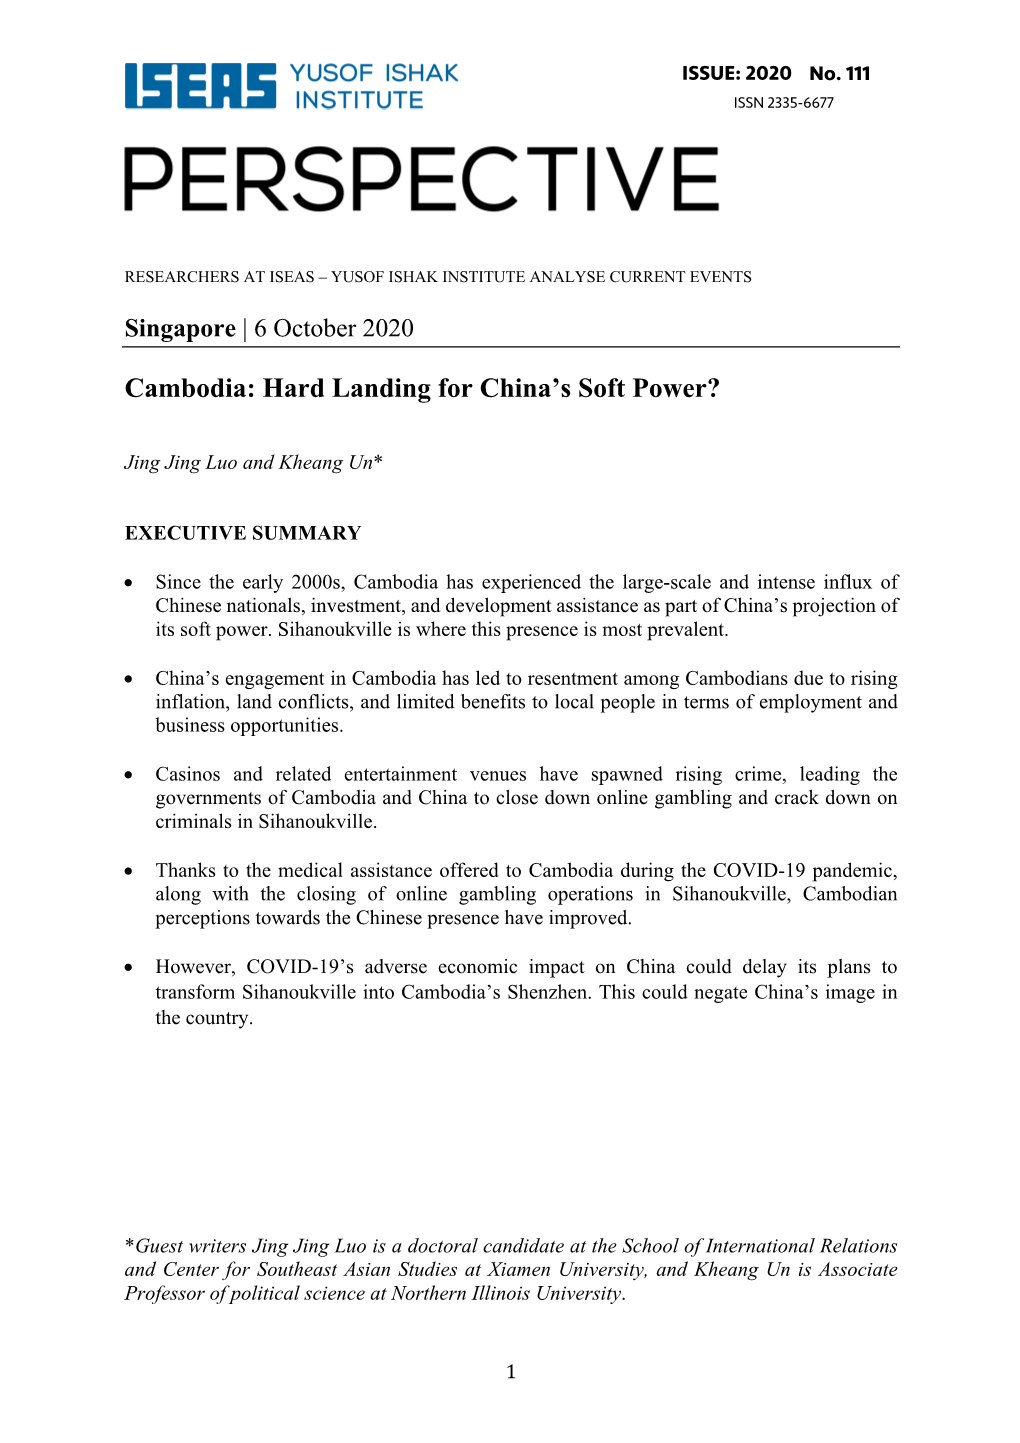 Cambodia: Hard Landing for China's Soft Power?